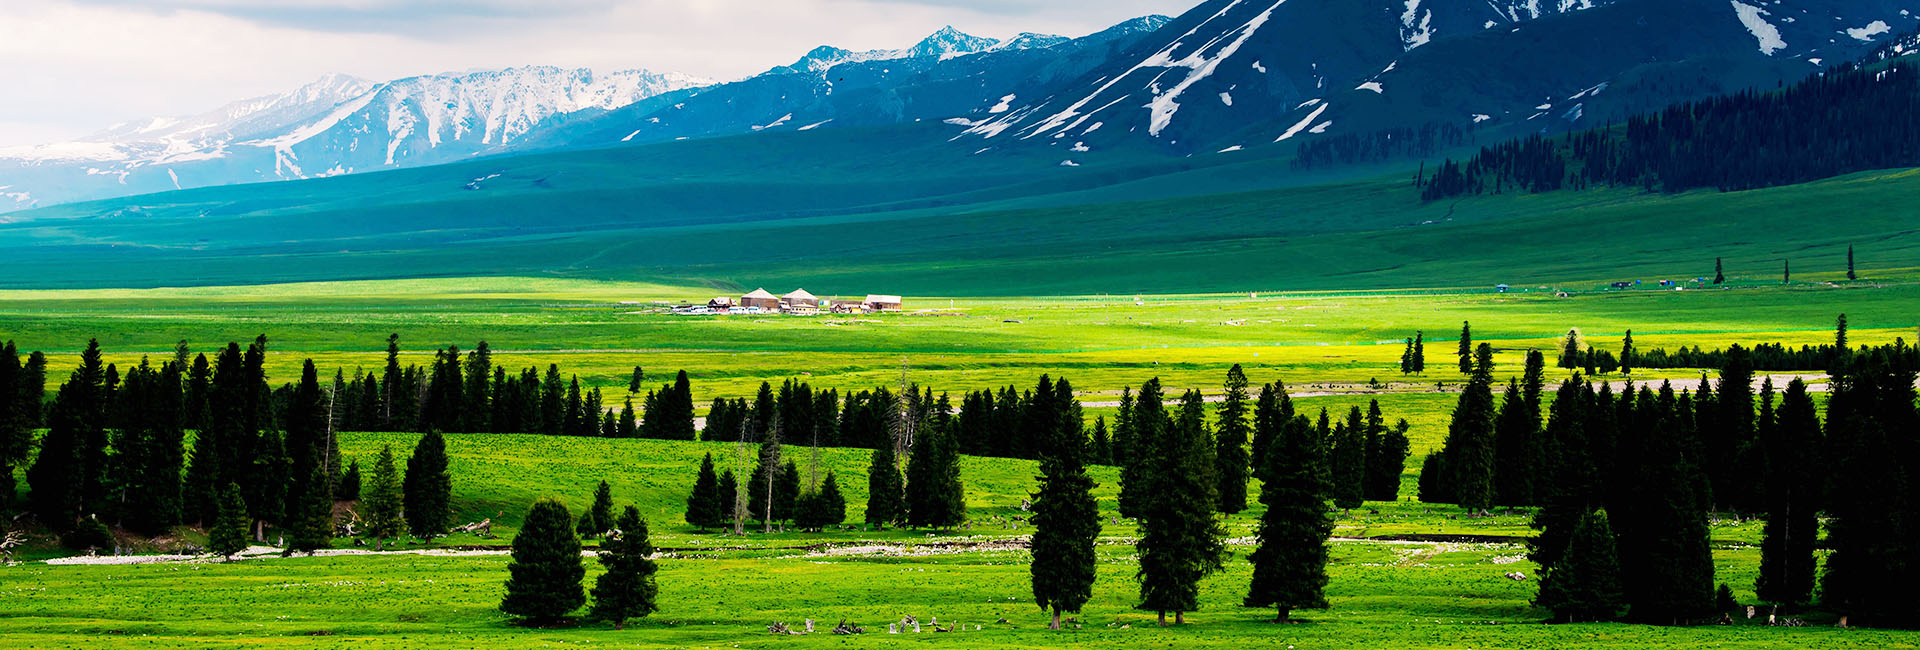 10 Days Stunning Xinjiang Tour including Ili Apricot Blossom and Naraty Grassland 2022/2023